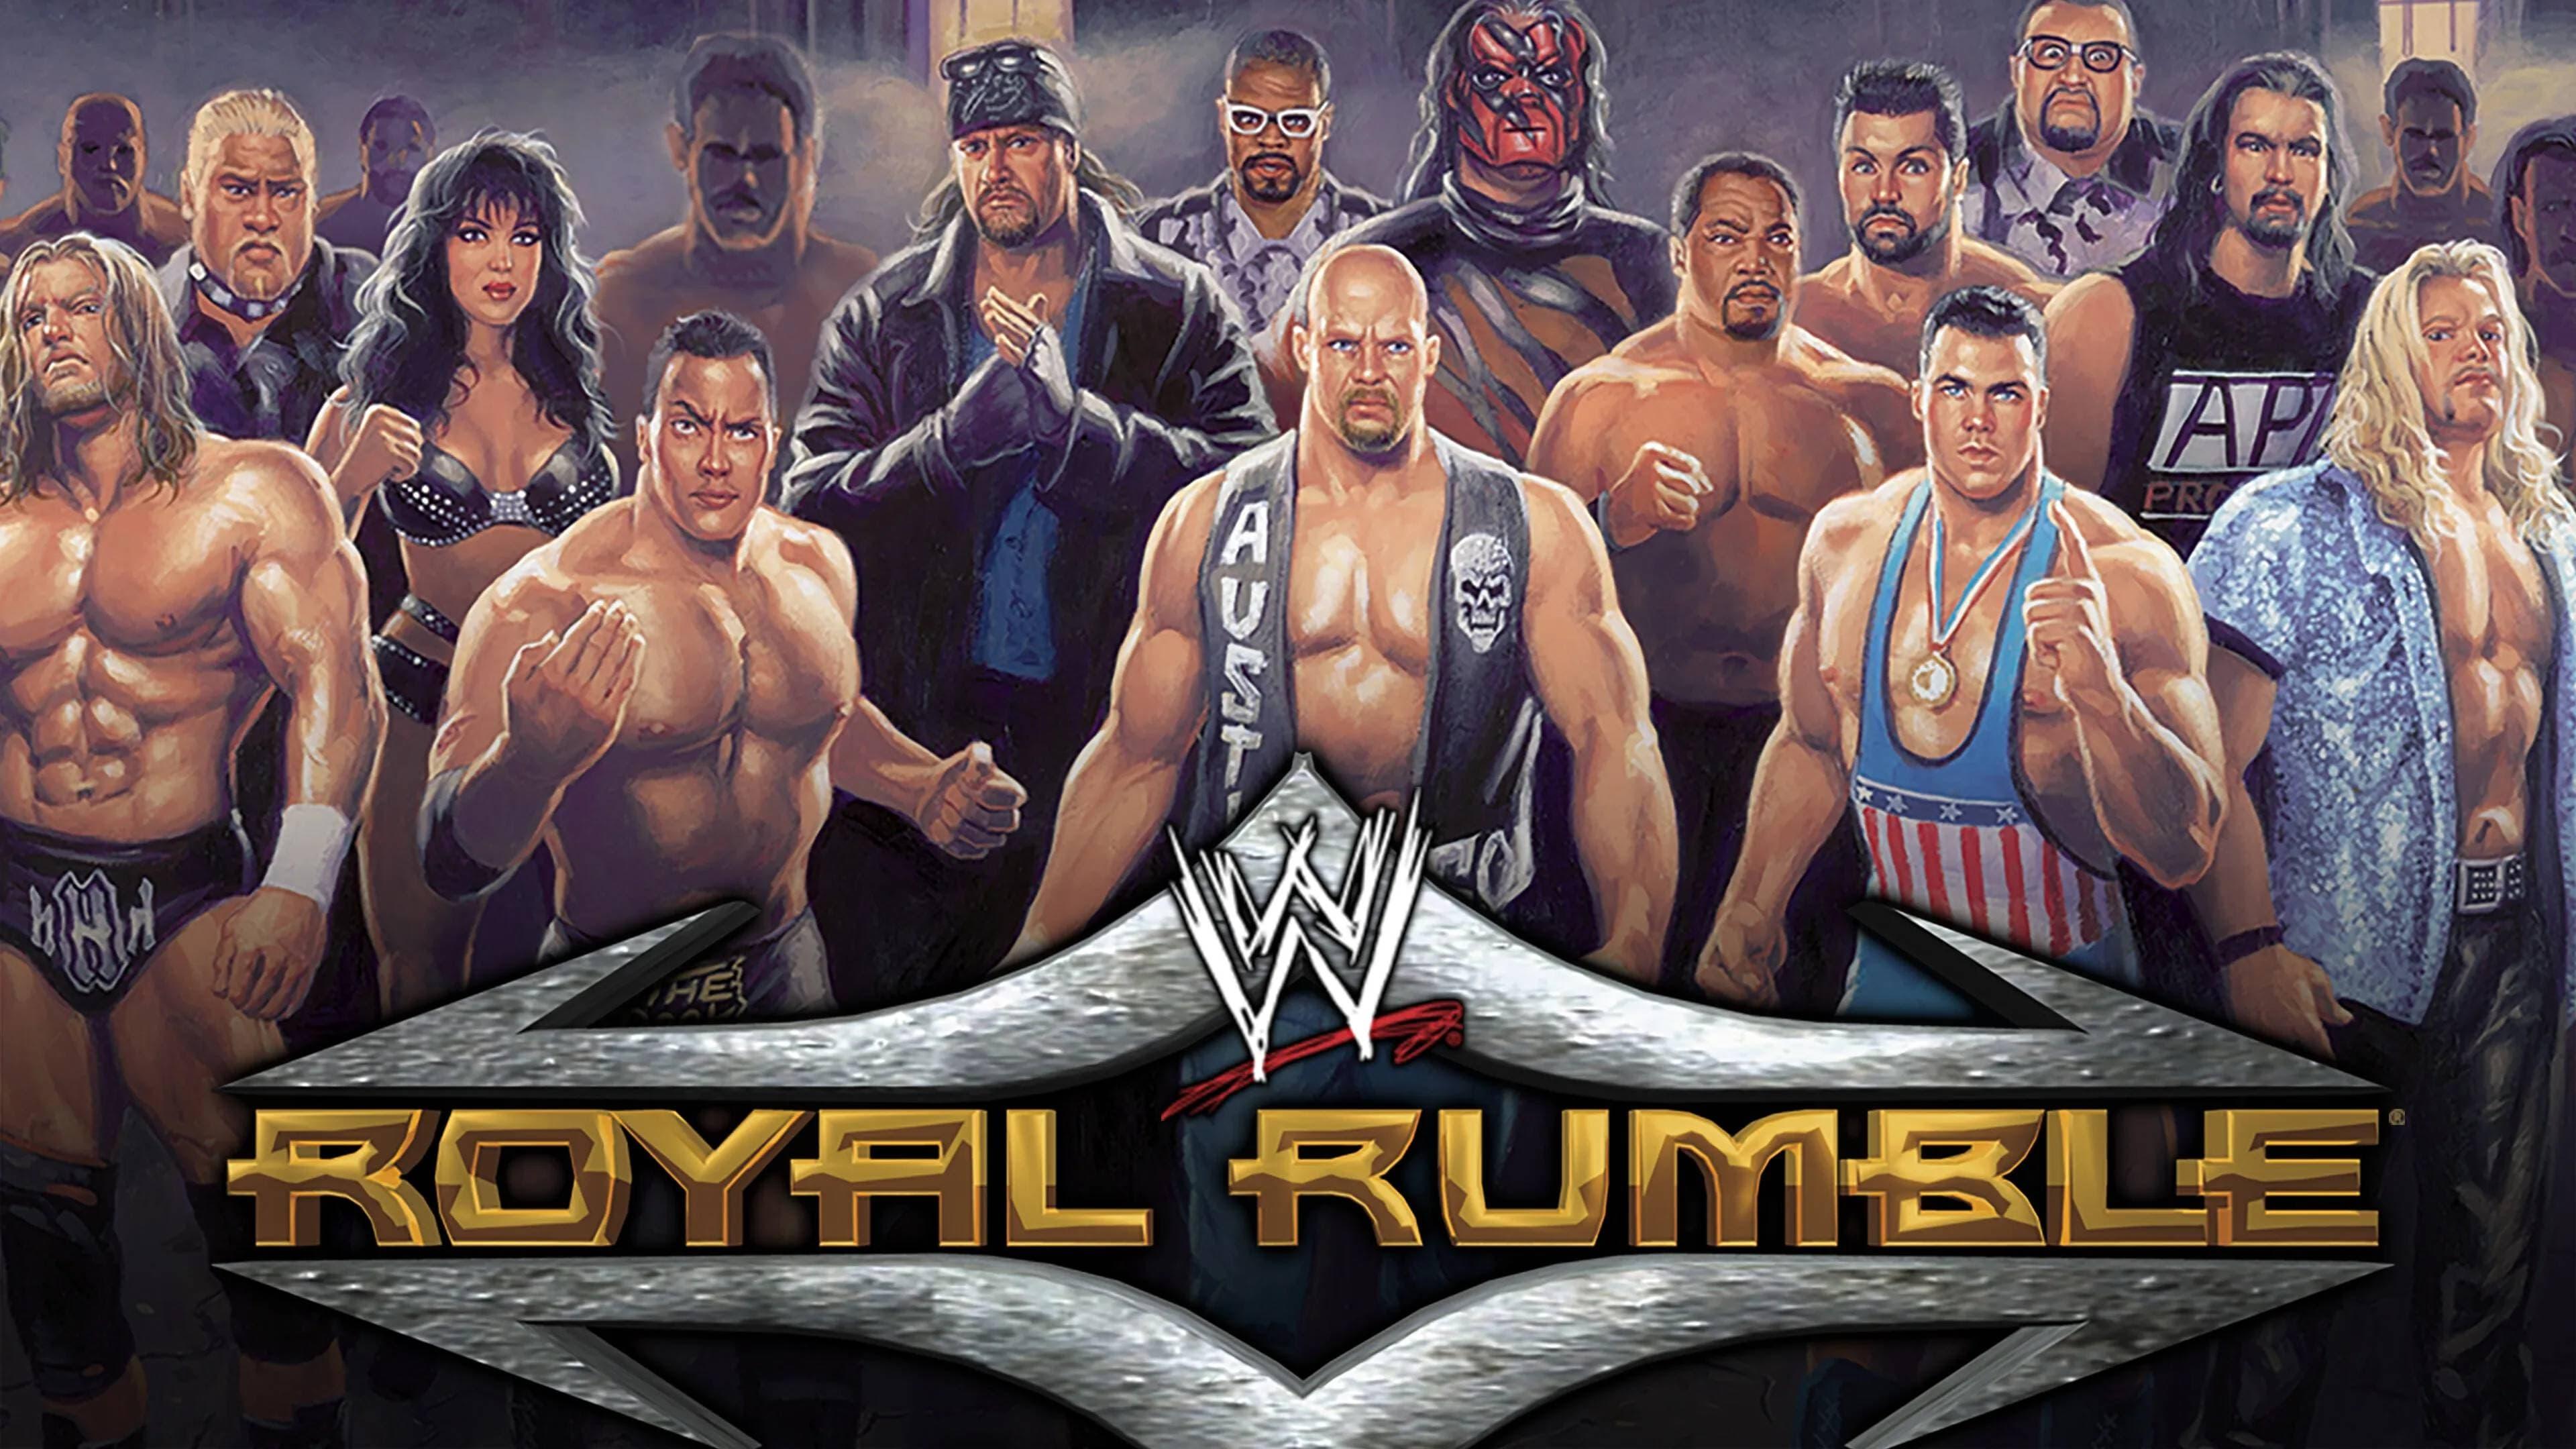 WWE Royal Rumble 2001 backdrop